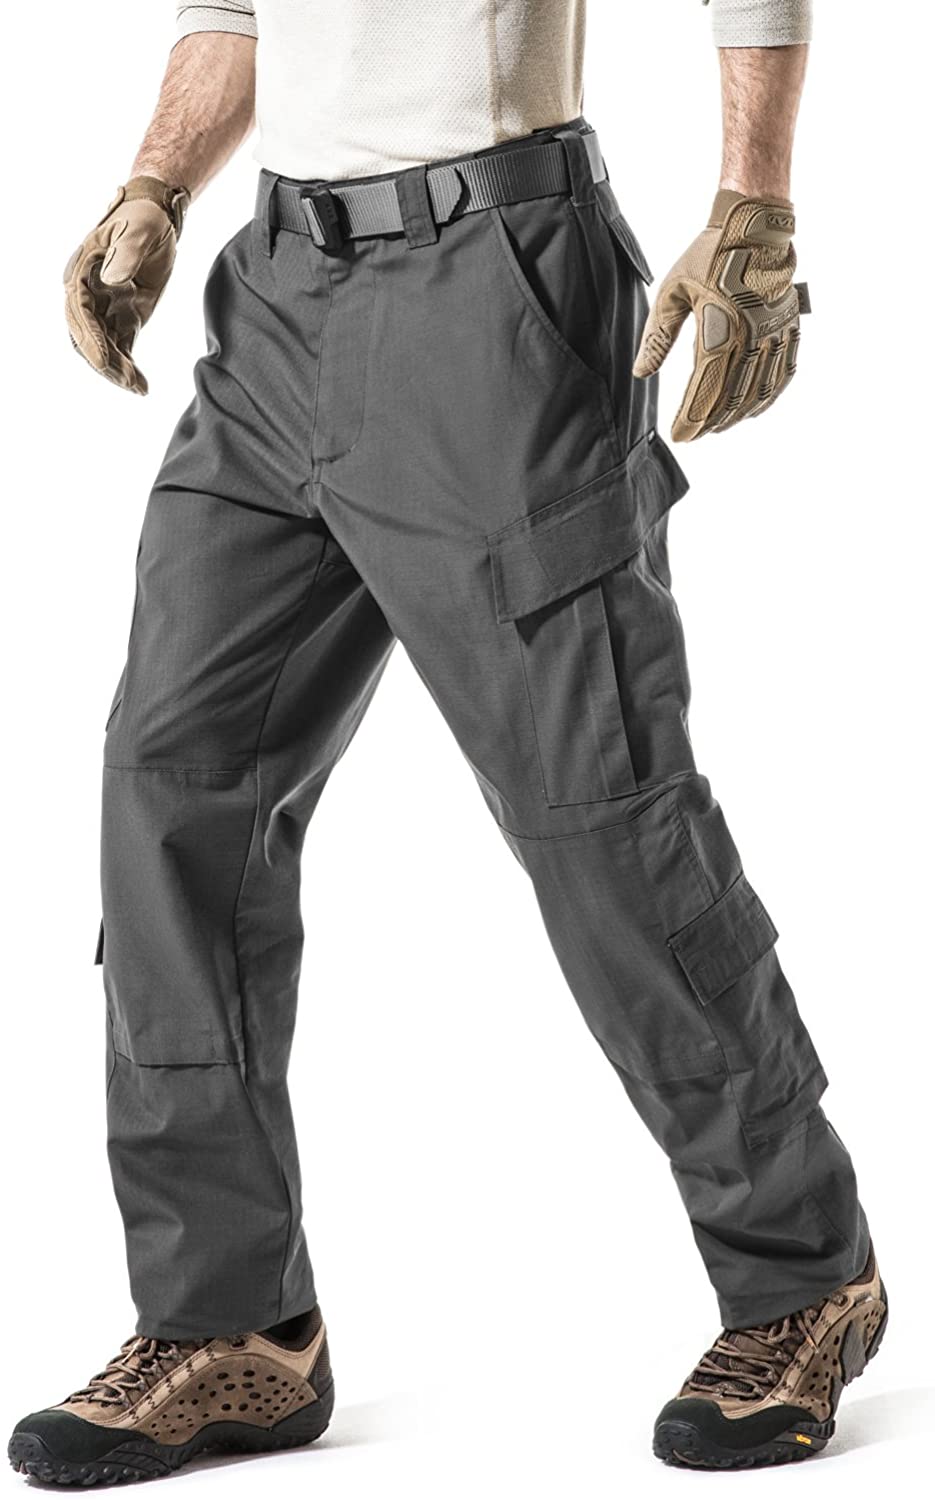 CQR Men's Tactical Pants Military Combat BDU/ACU Cargo Pants Water Resistant Ripstop Work Pants Hiking Outdoor Apparel 